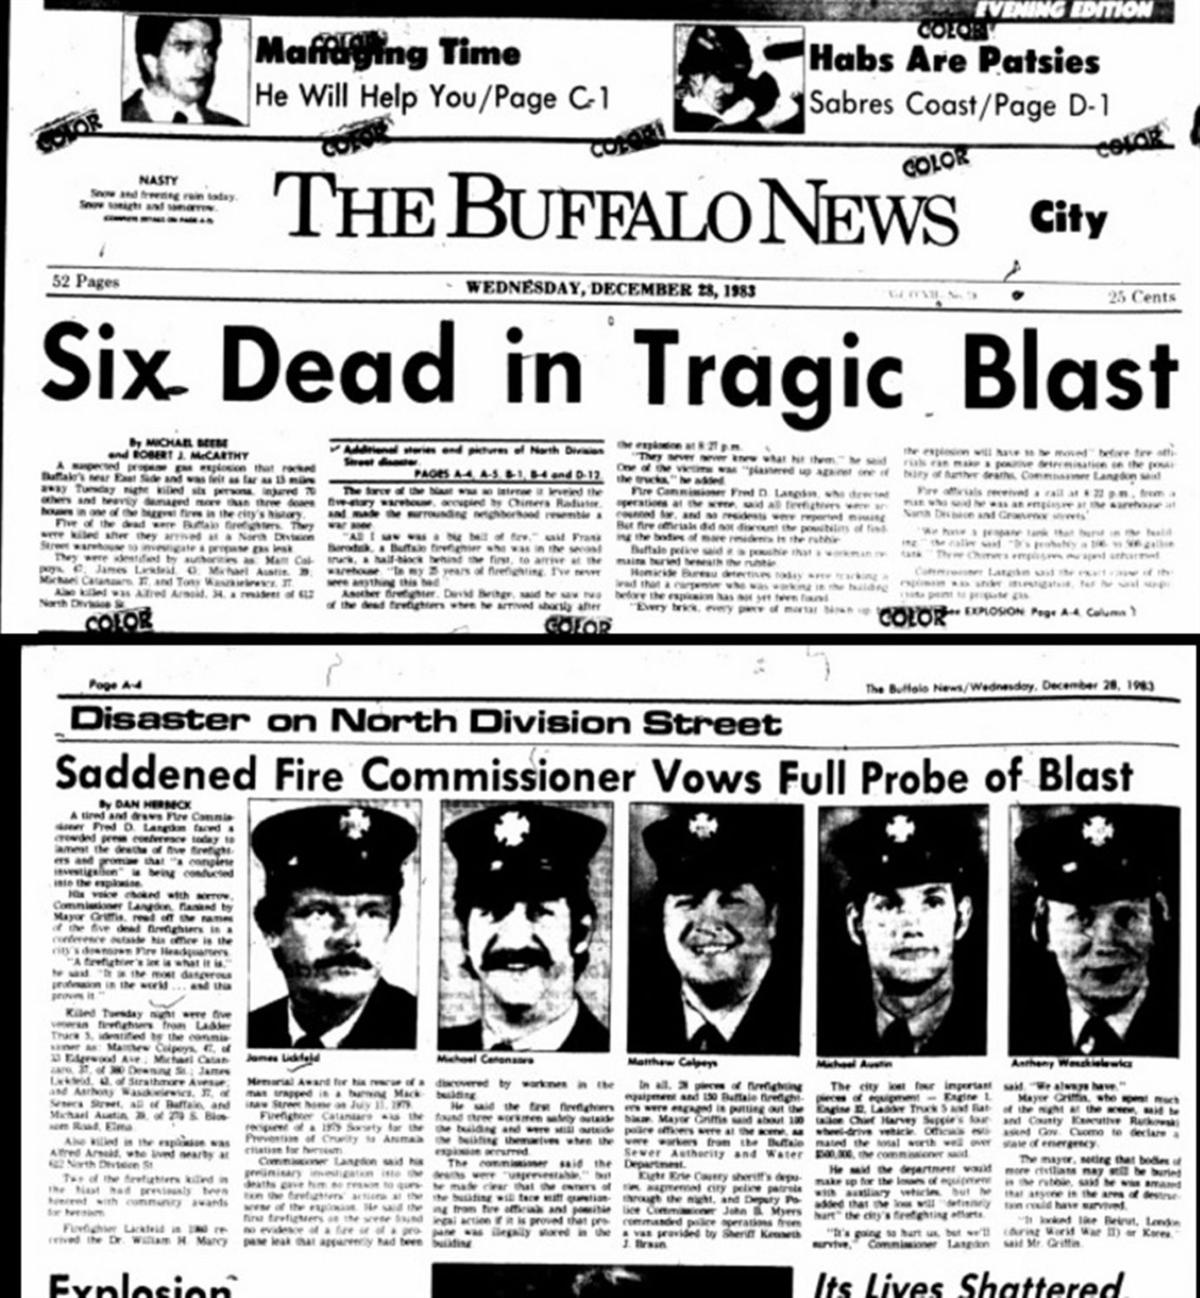 Fatal propane explosion of Dec. 27, 1983